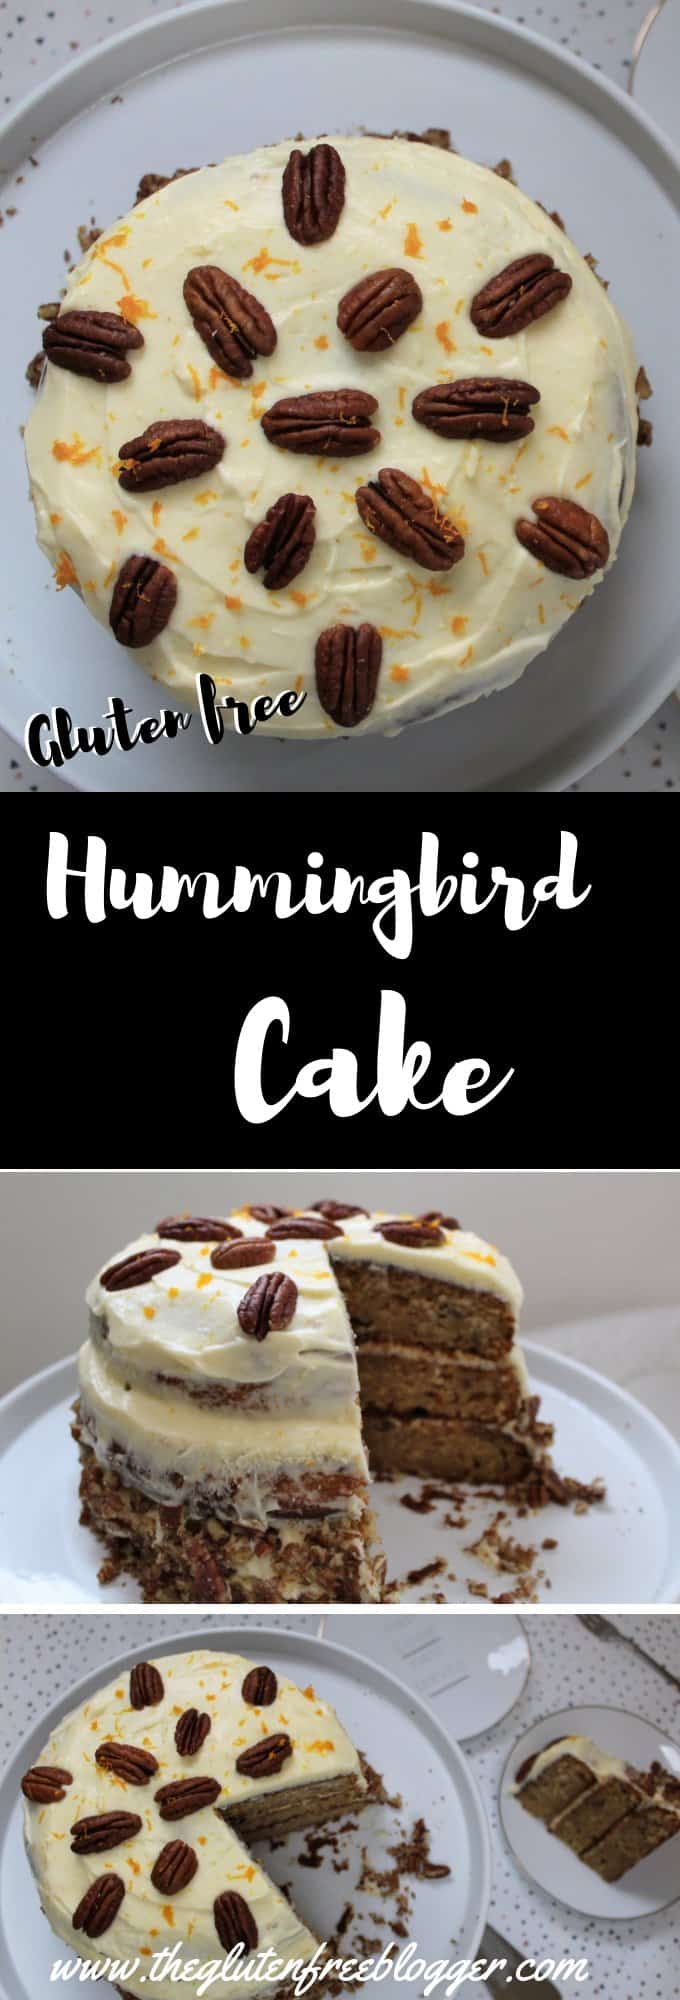 Gluten free hummingbird cake recipe - great british bake off - showstopper cake - coeliac disease